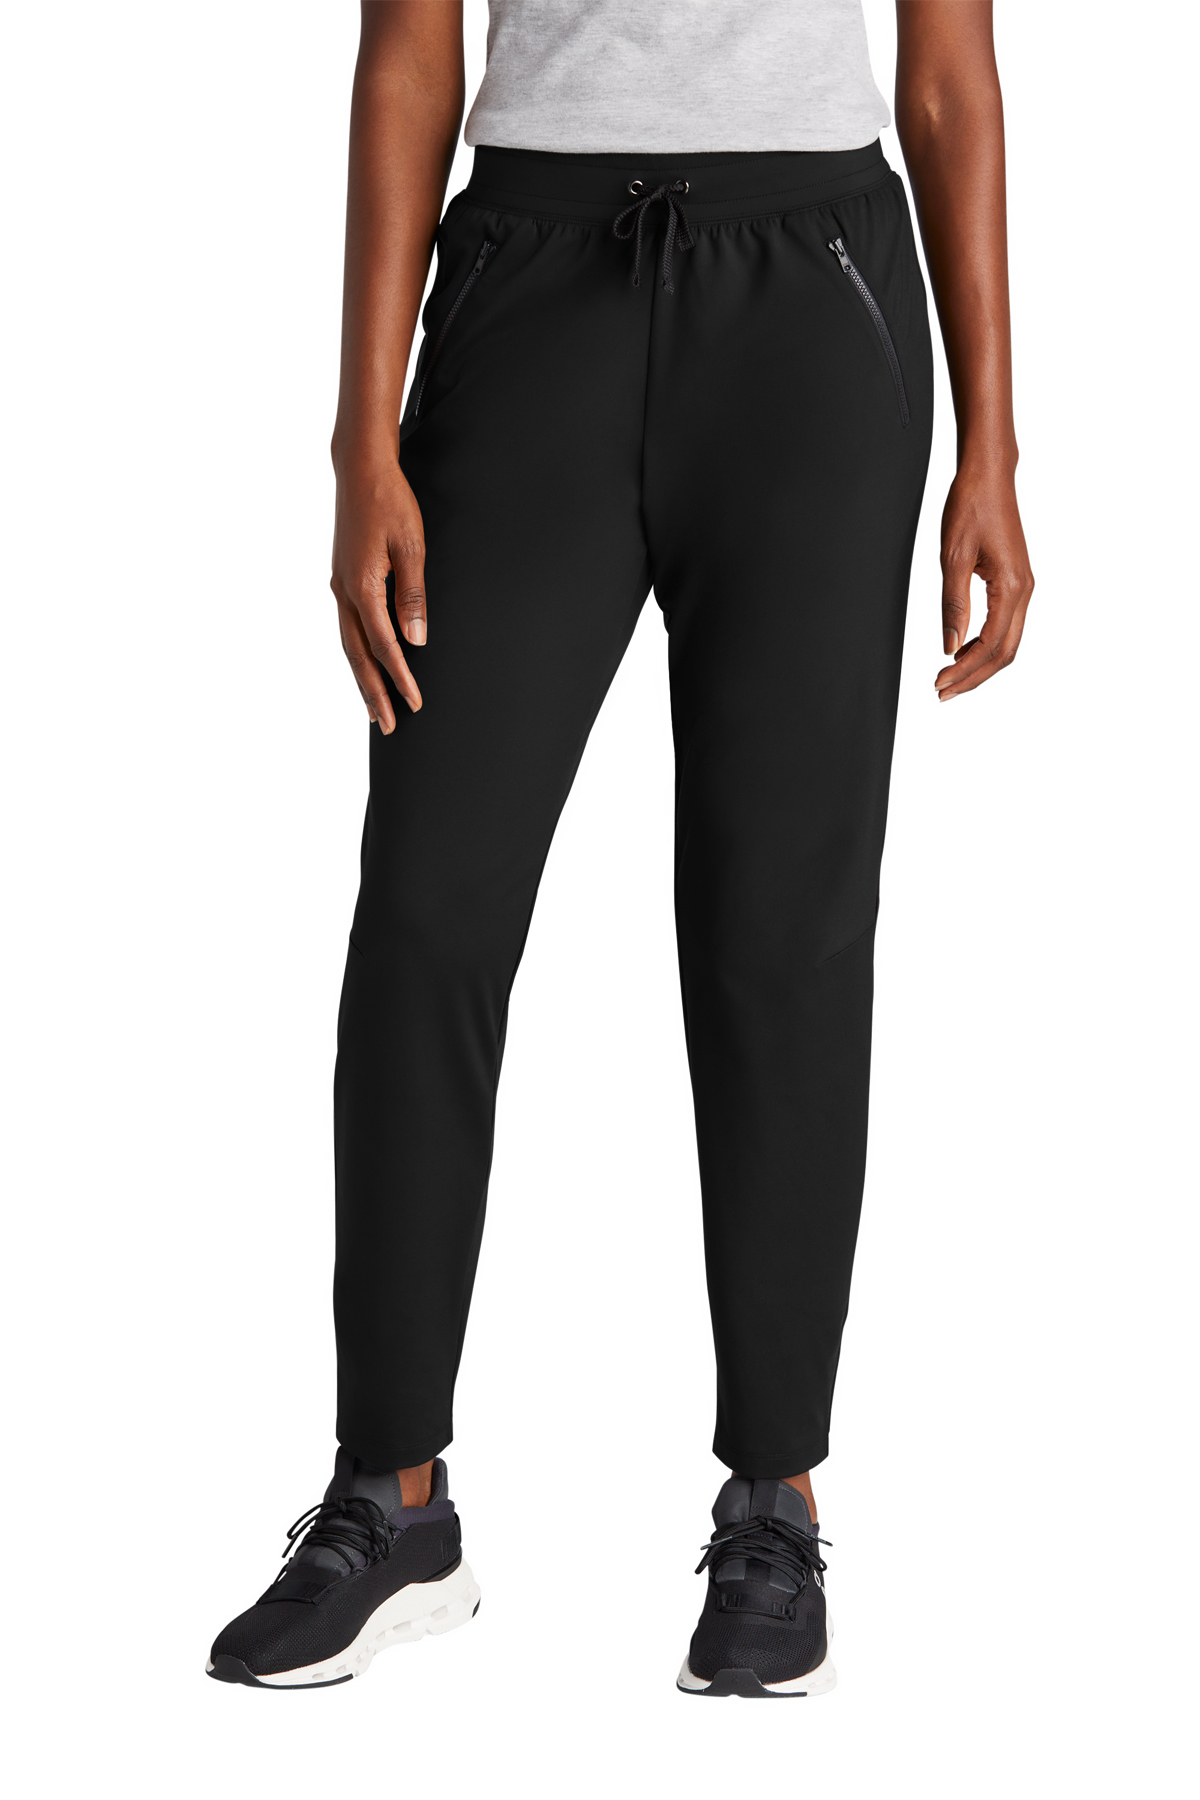 Women's joggers sweatpants - black